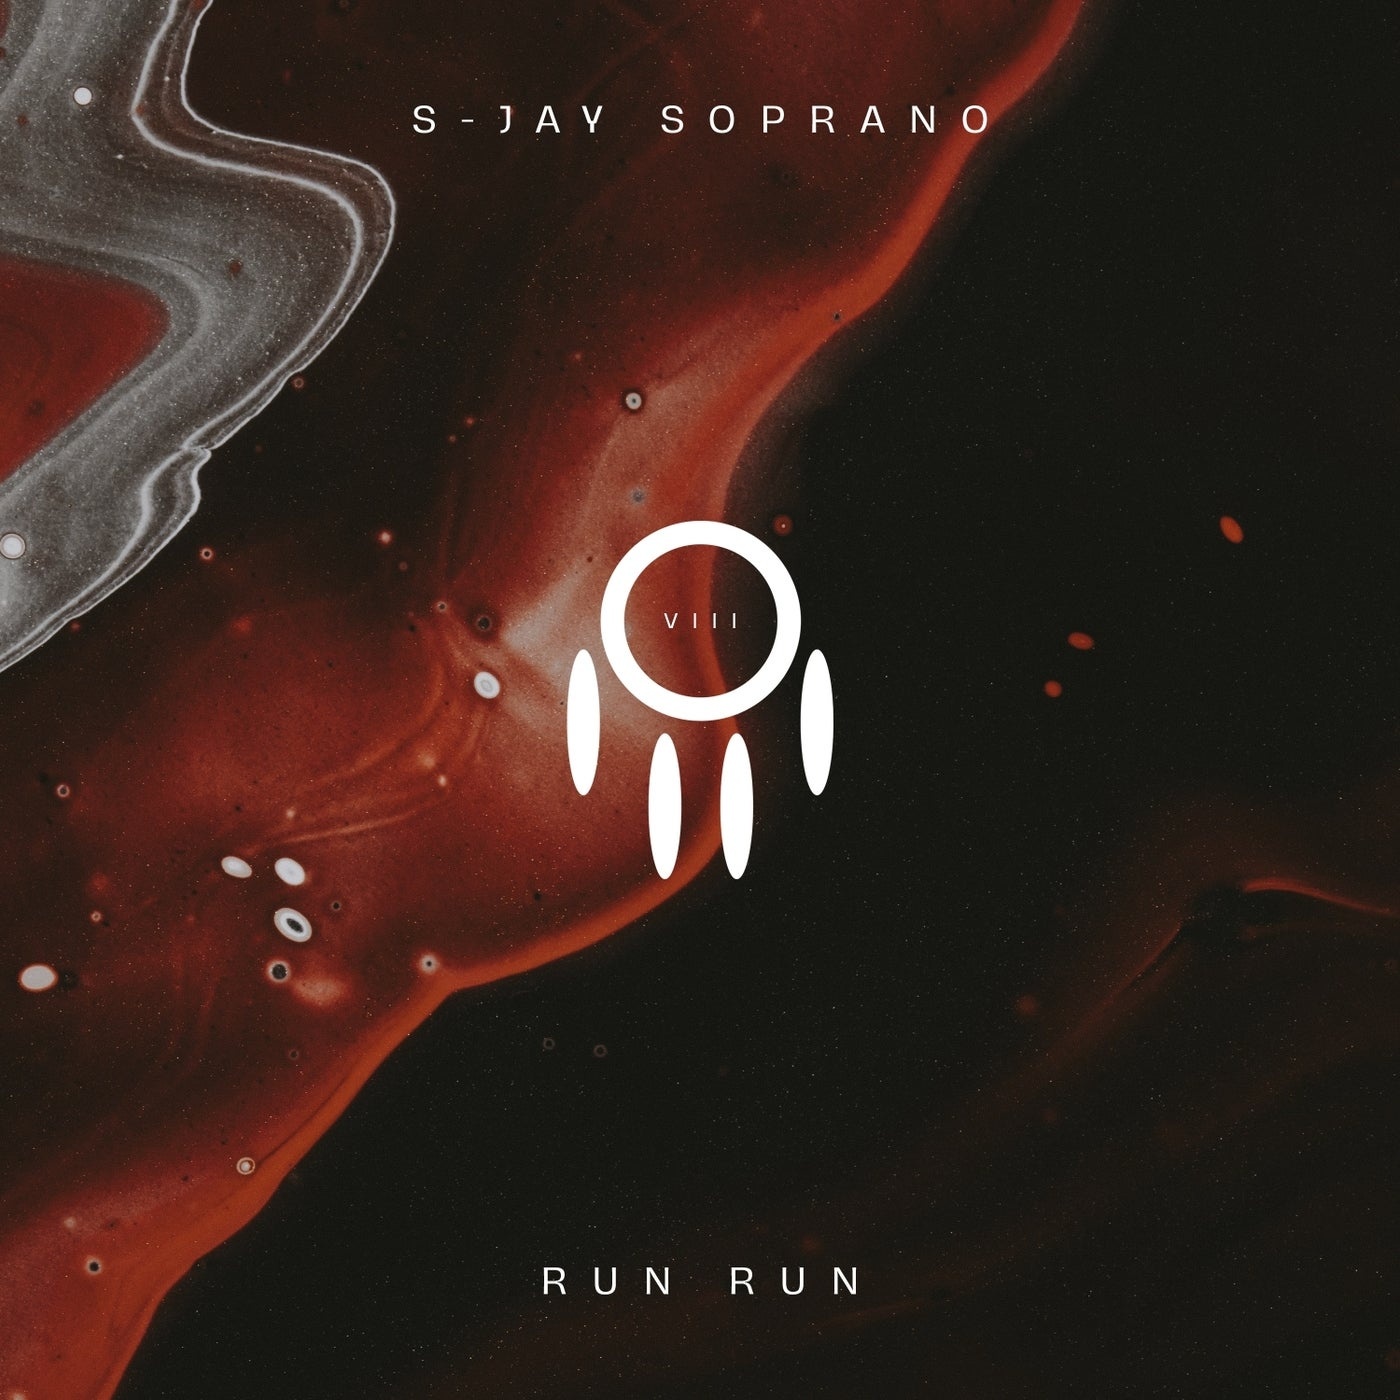 S-Jay Soprano - Run Run [SOMMA008]